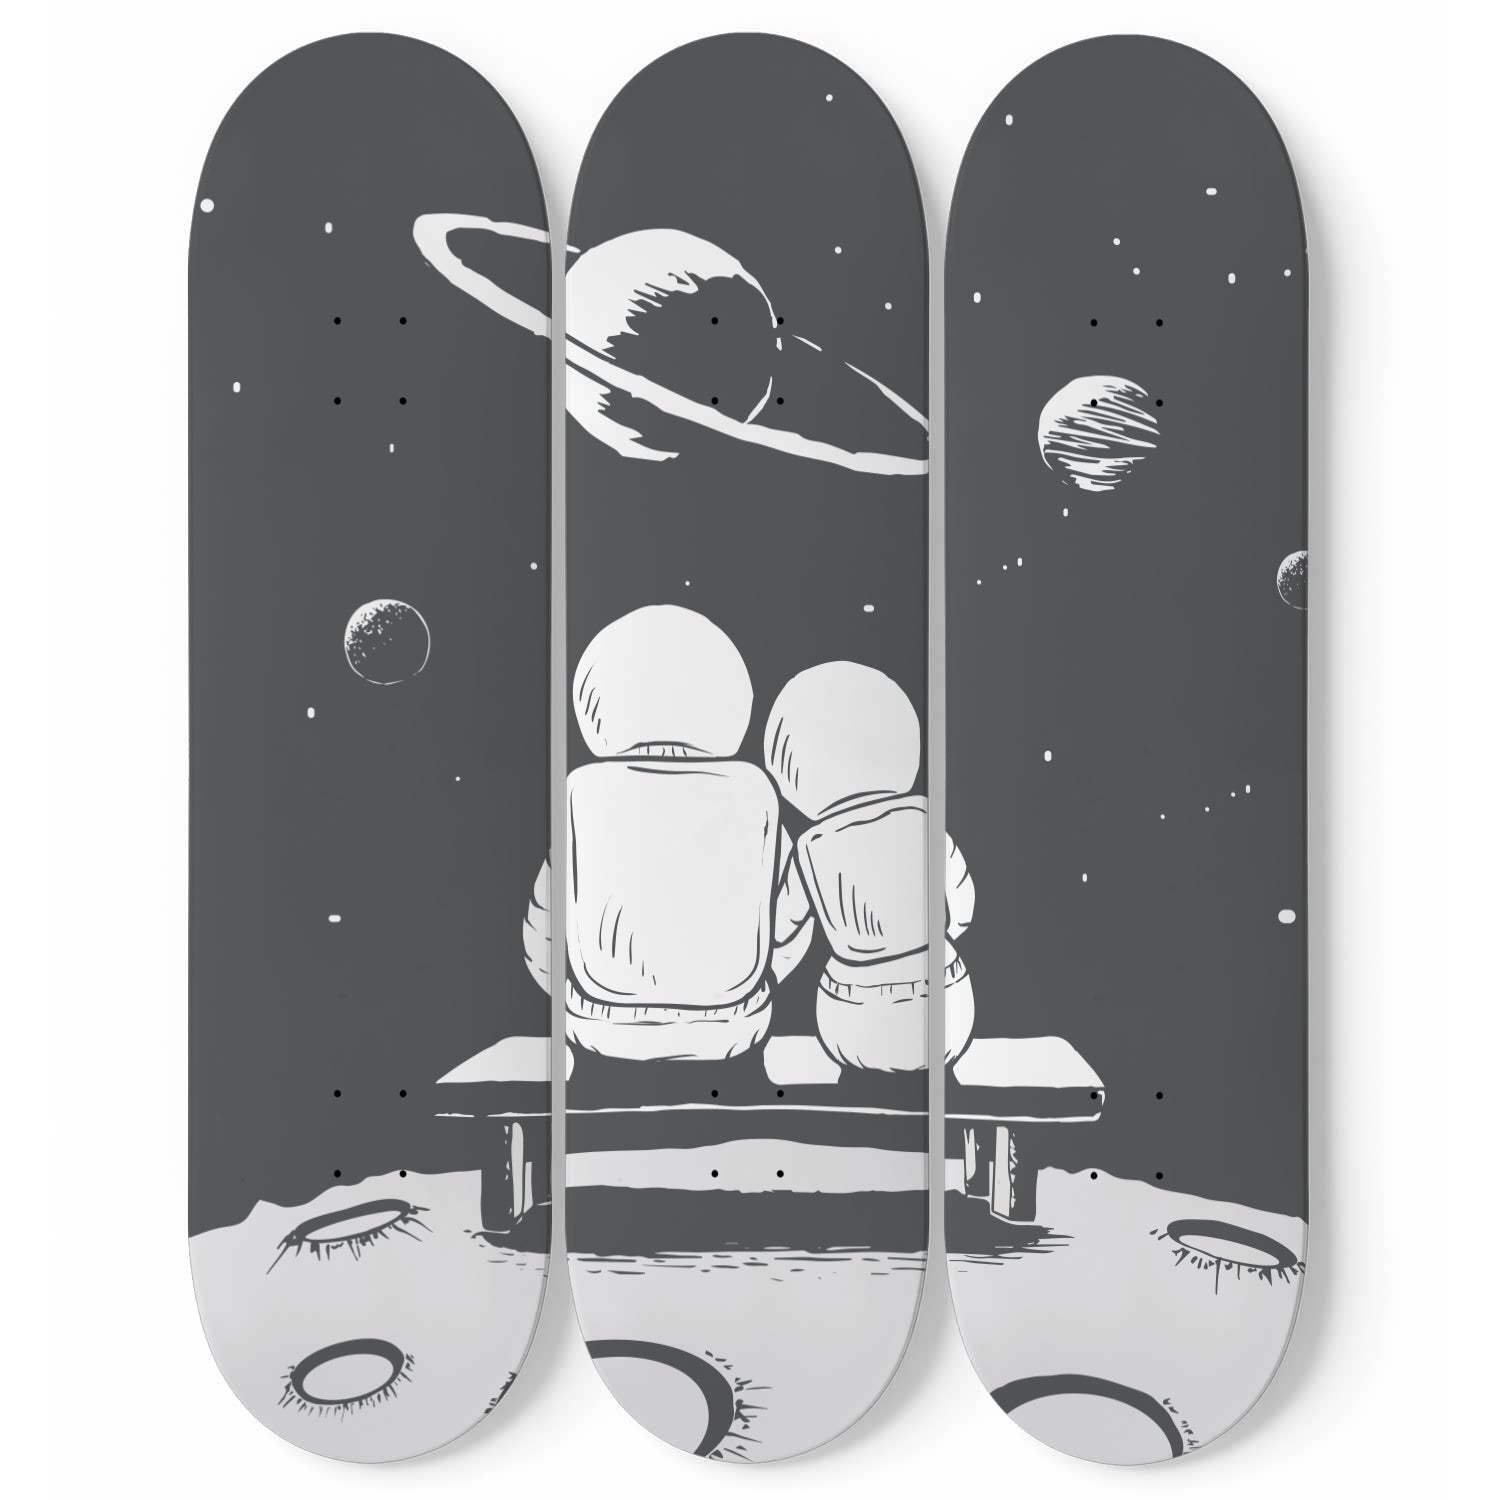 Astro Adventure #11.0 - Skater Wall